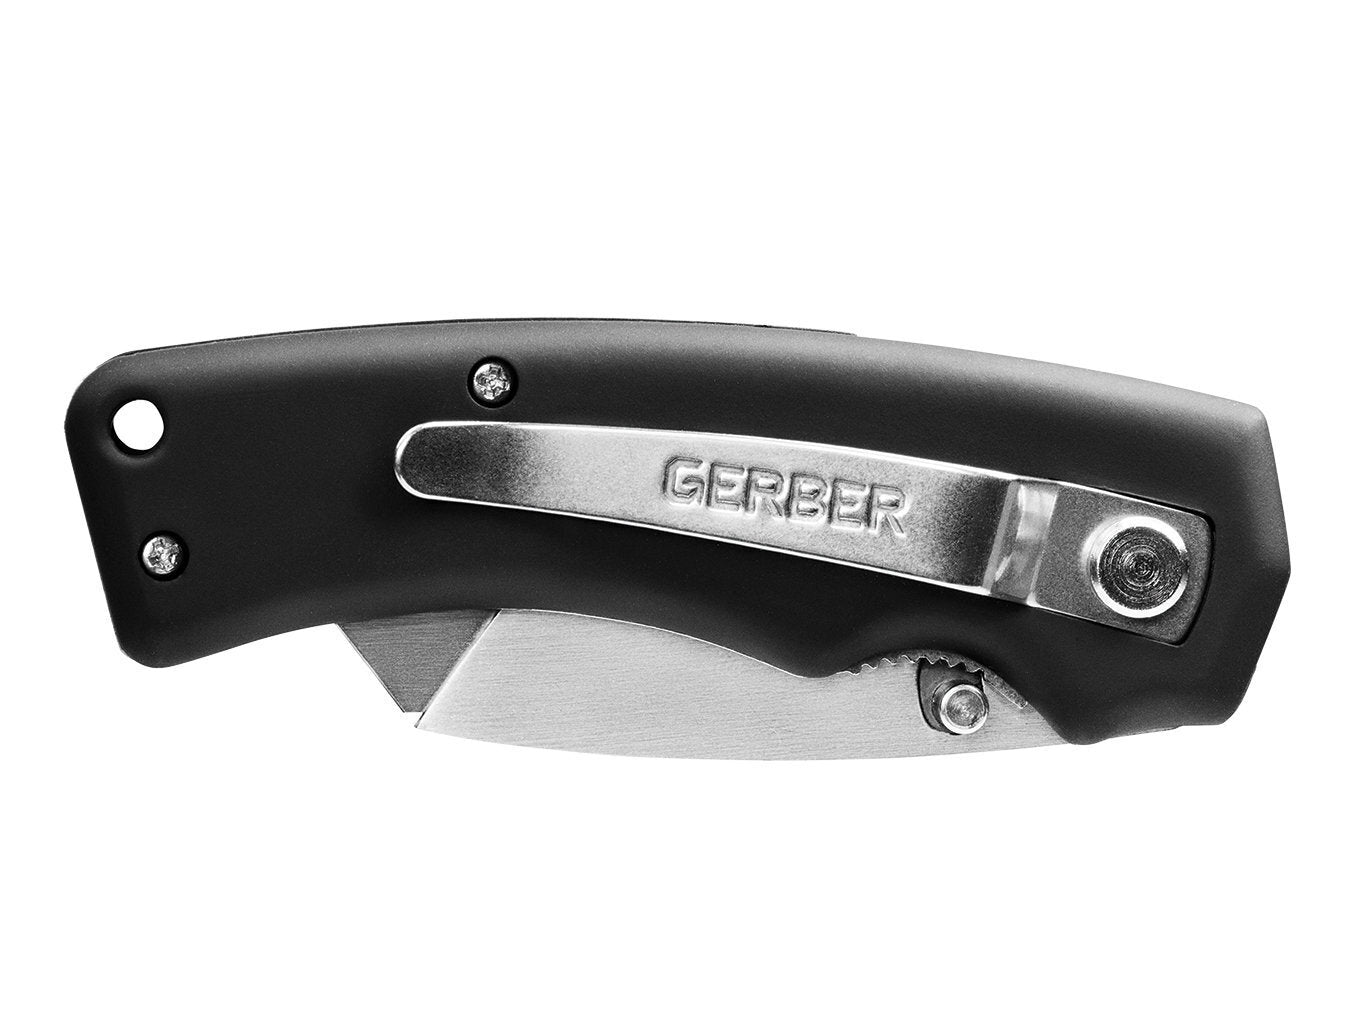 Gerber Gerber Edge Tachide Black Utility Folding Knife - Black Rubber Handle #31-000668 Gray